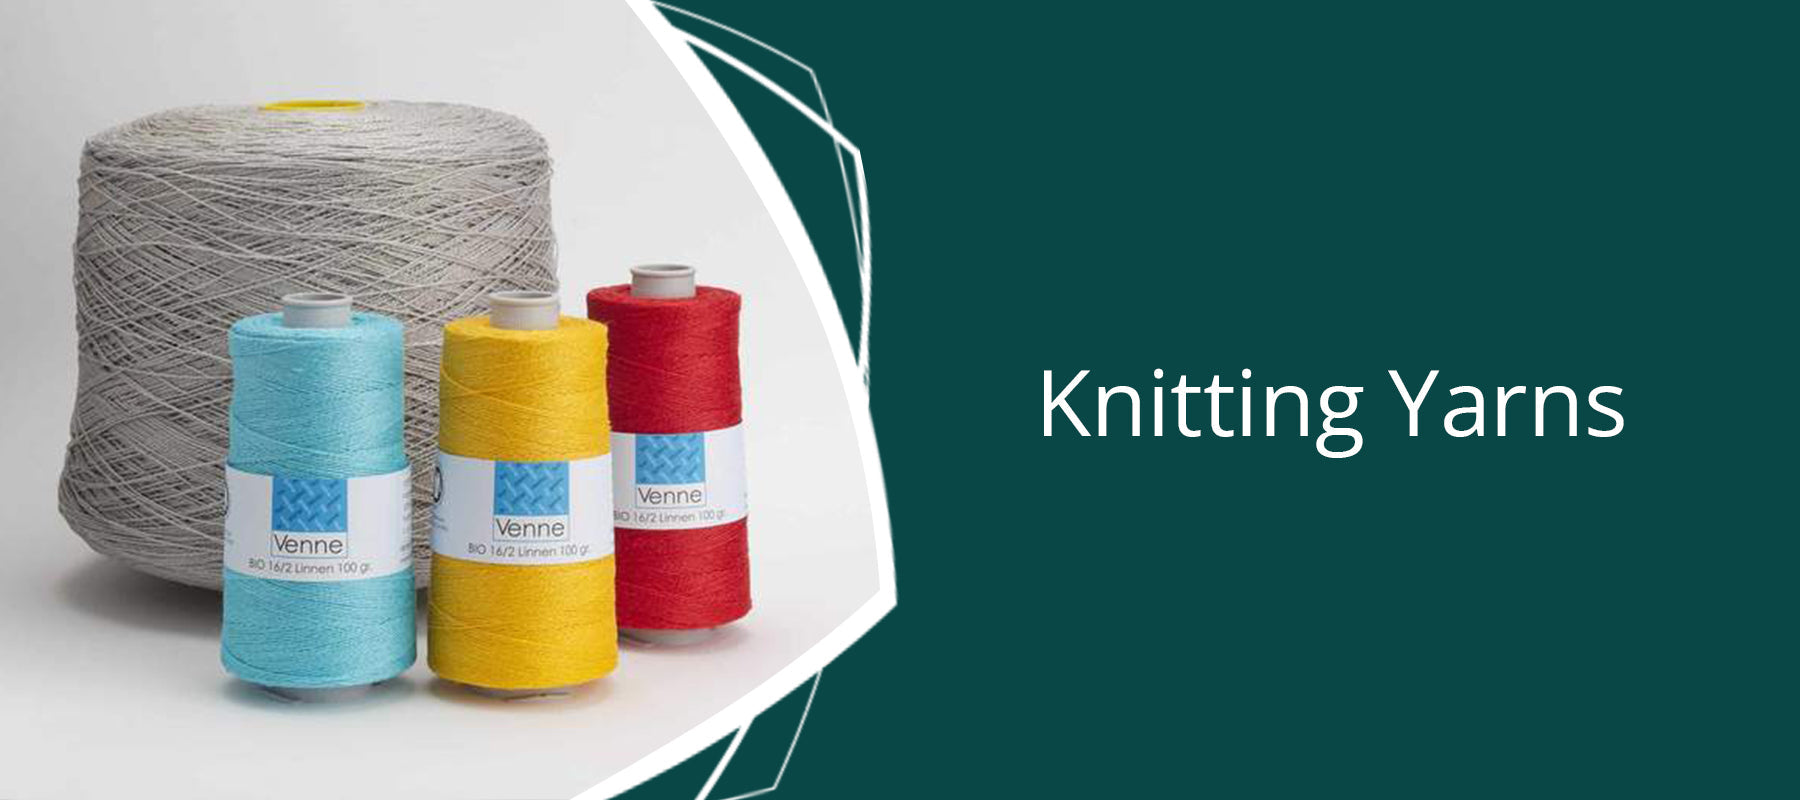 Knitting Yarn Australia: Knitting And Crochet Made Easy